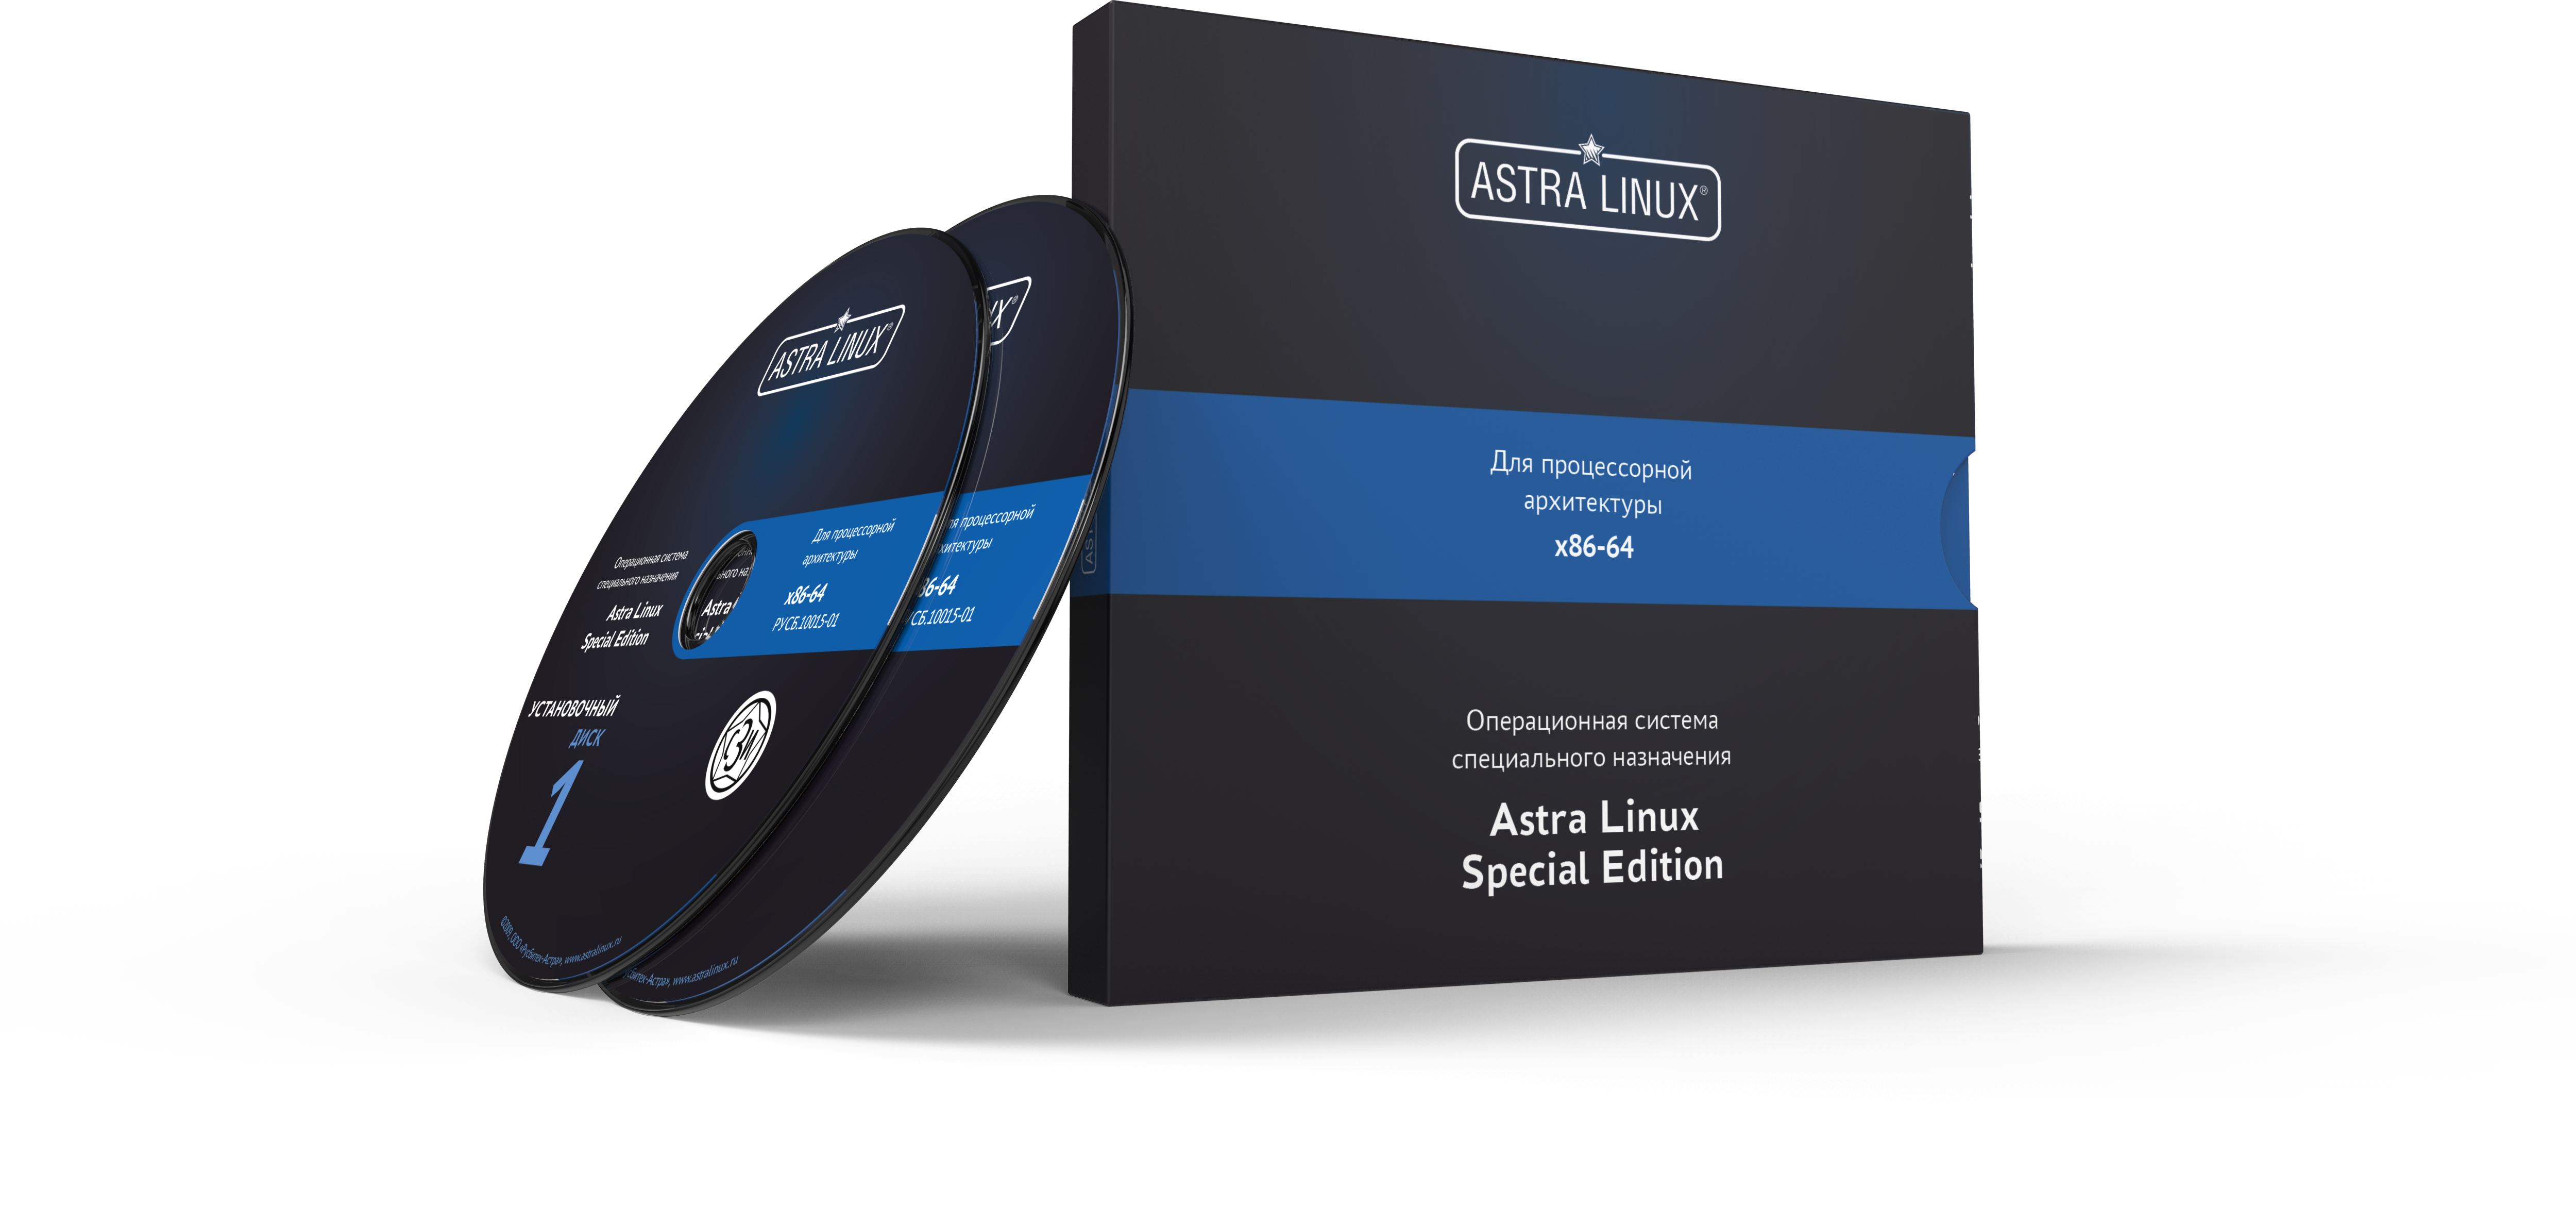 Astra Linux Special Edition 1.7 - Воронеж, РУСБ.10015-01 (ФСТЭК), без огр. срока, ТП "Стандарт" 36 мес.